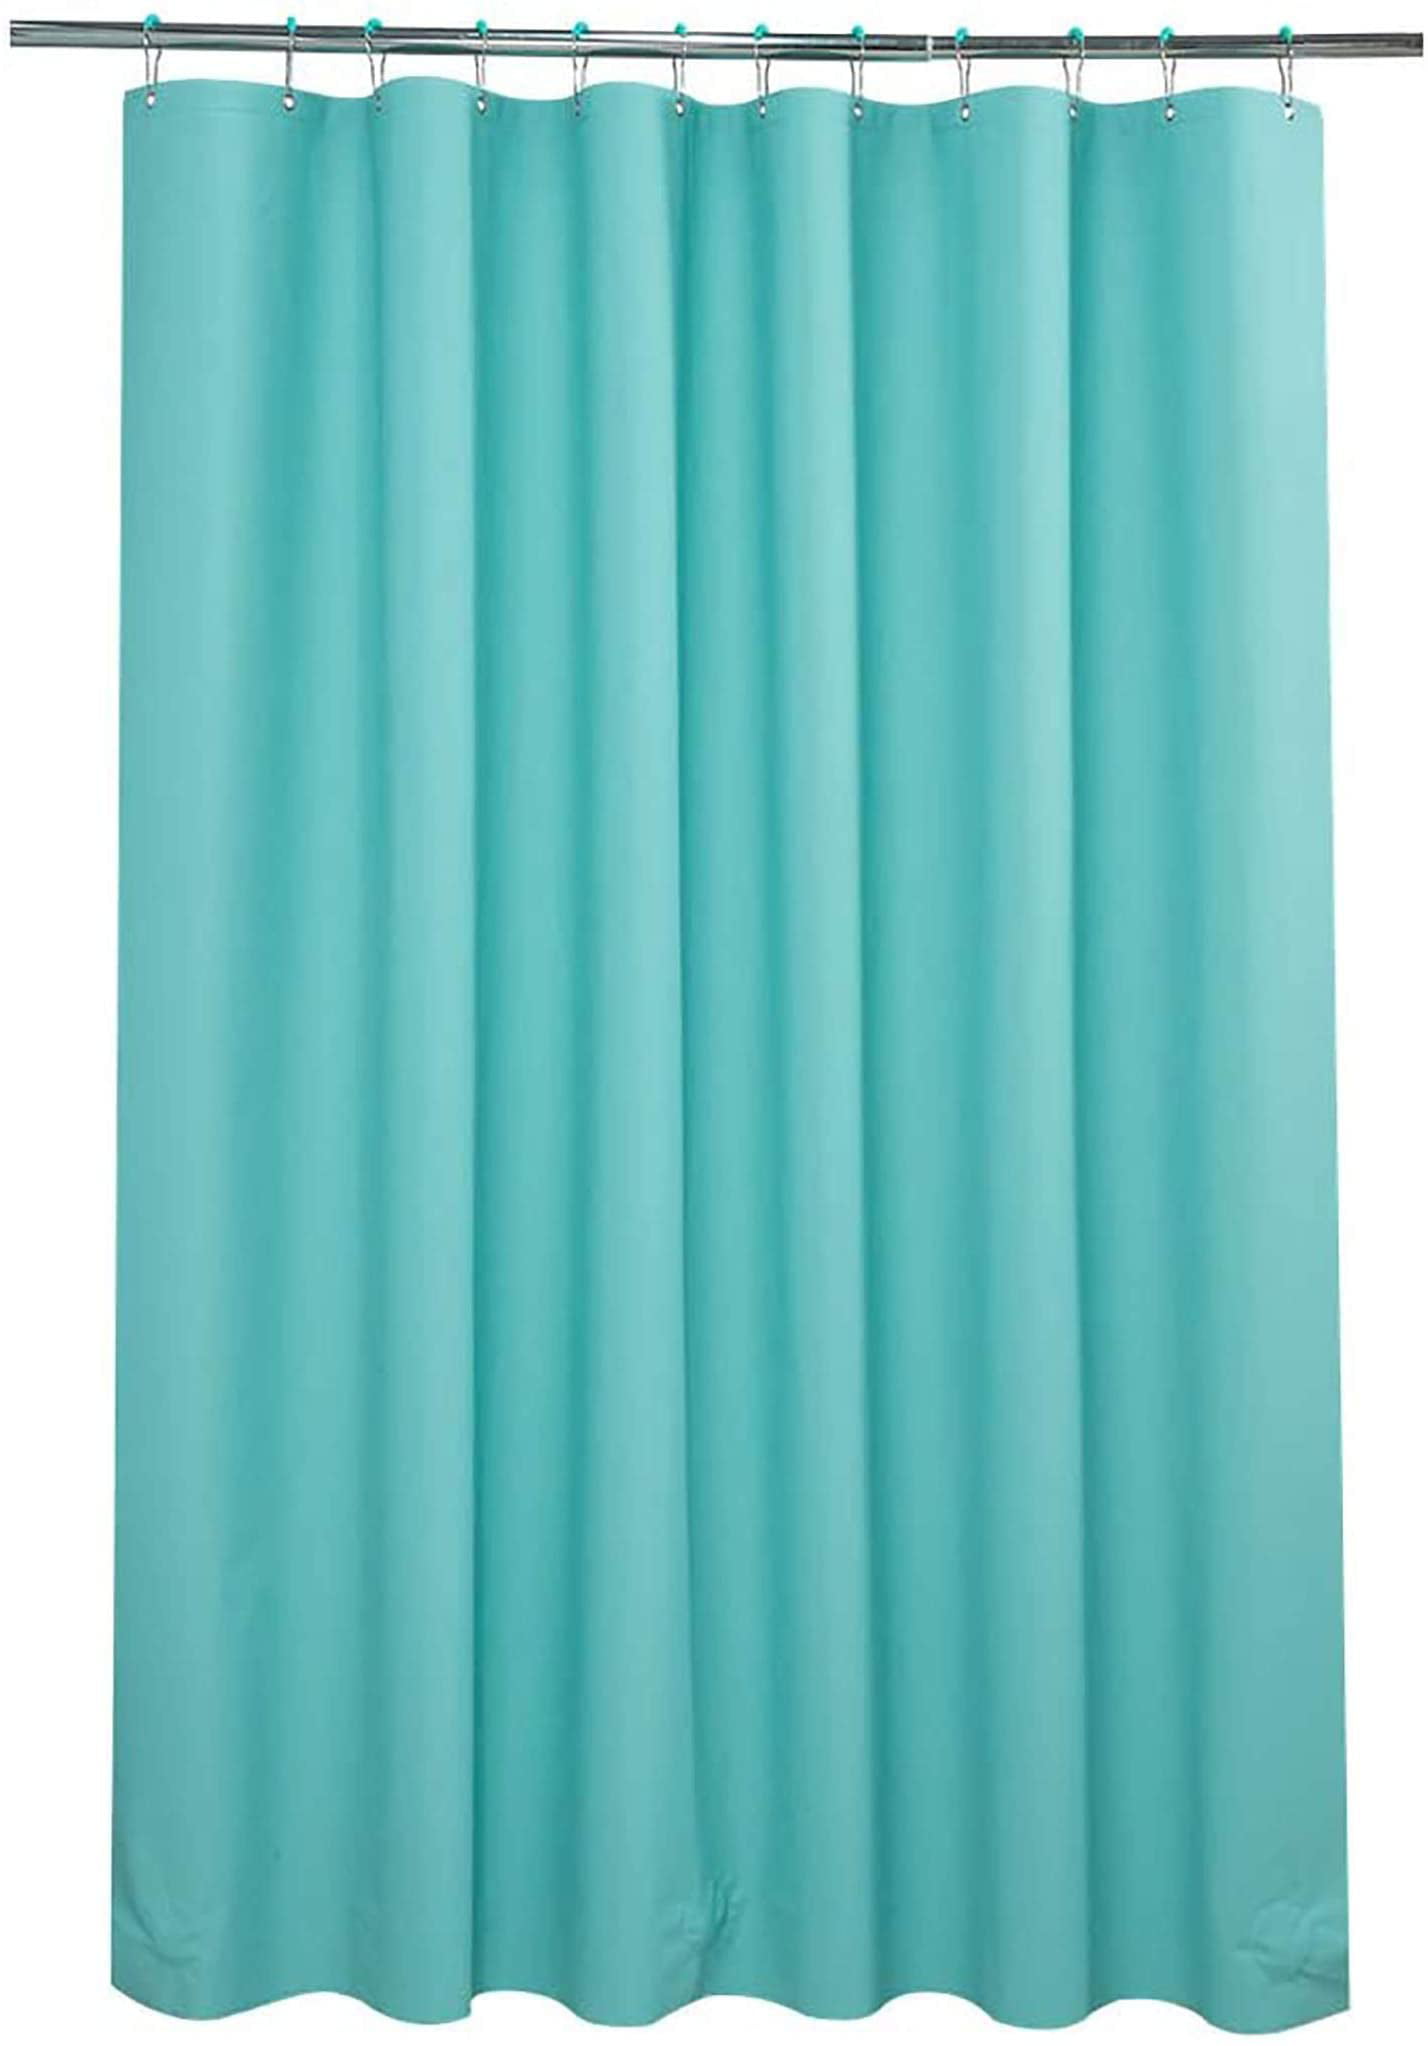 Amazer Shower Curtain Liner 72 Inches W x 78 Inches H EVA 5G Bathroom Plastic S 